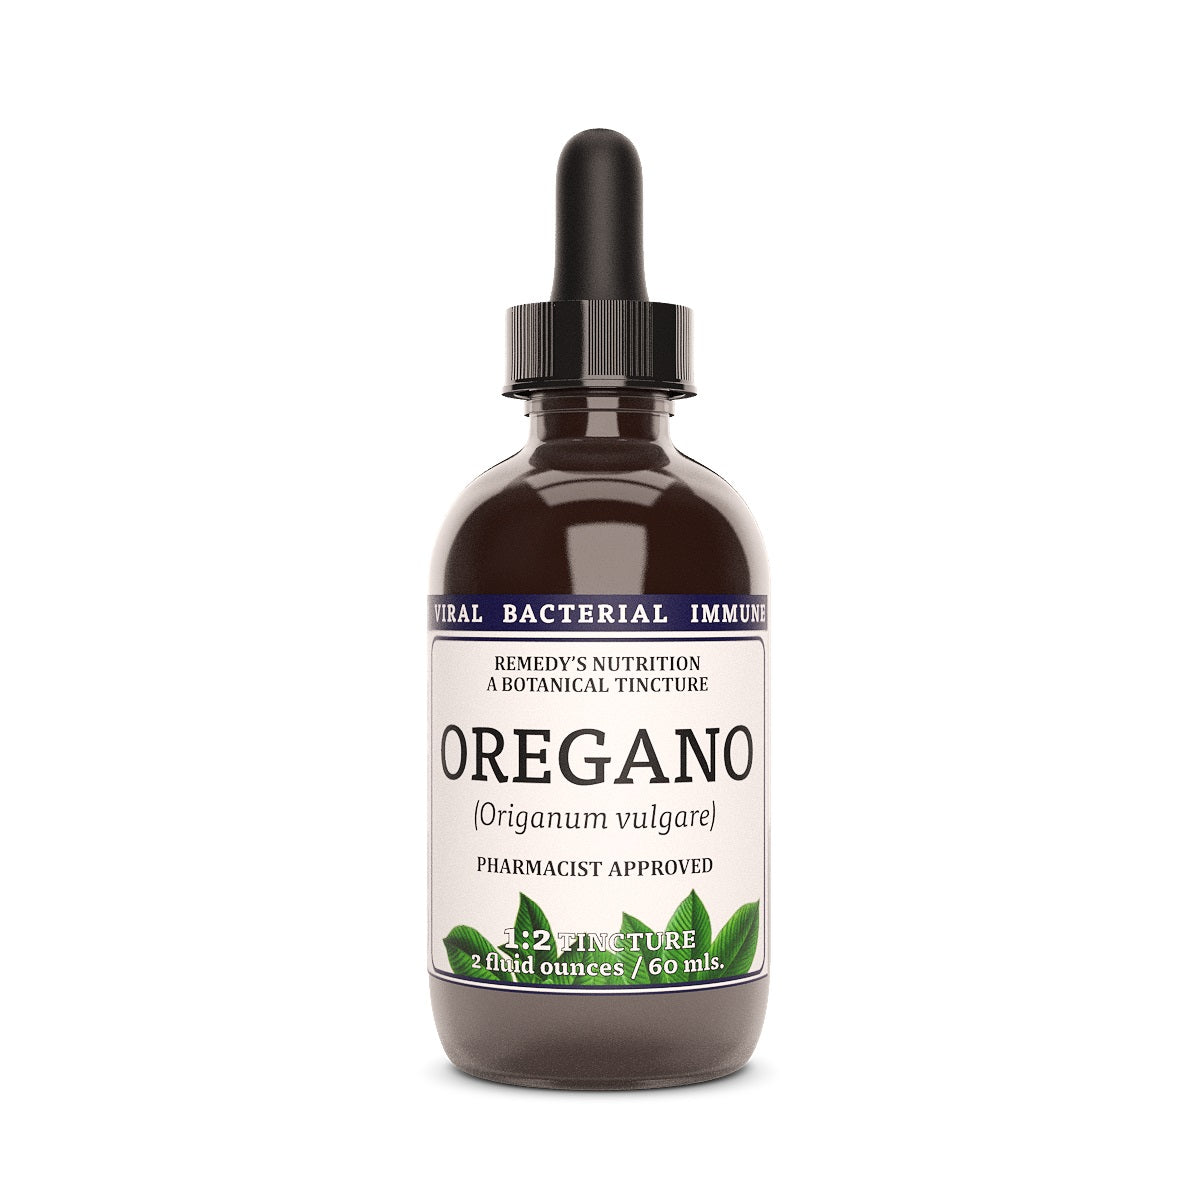 Remedy's Nutrition Oregano Tincture Botanical Origanum vulgare 2 fluid ounces Made in the USA